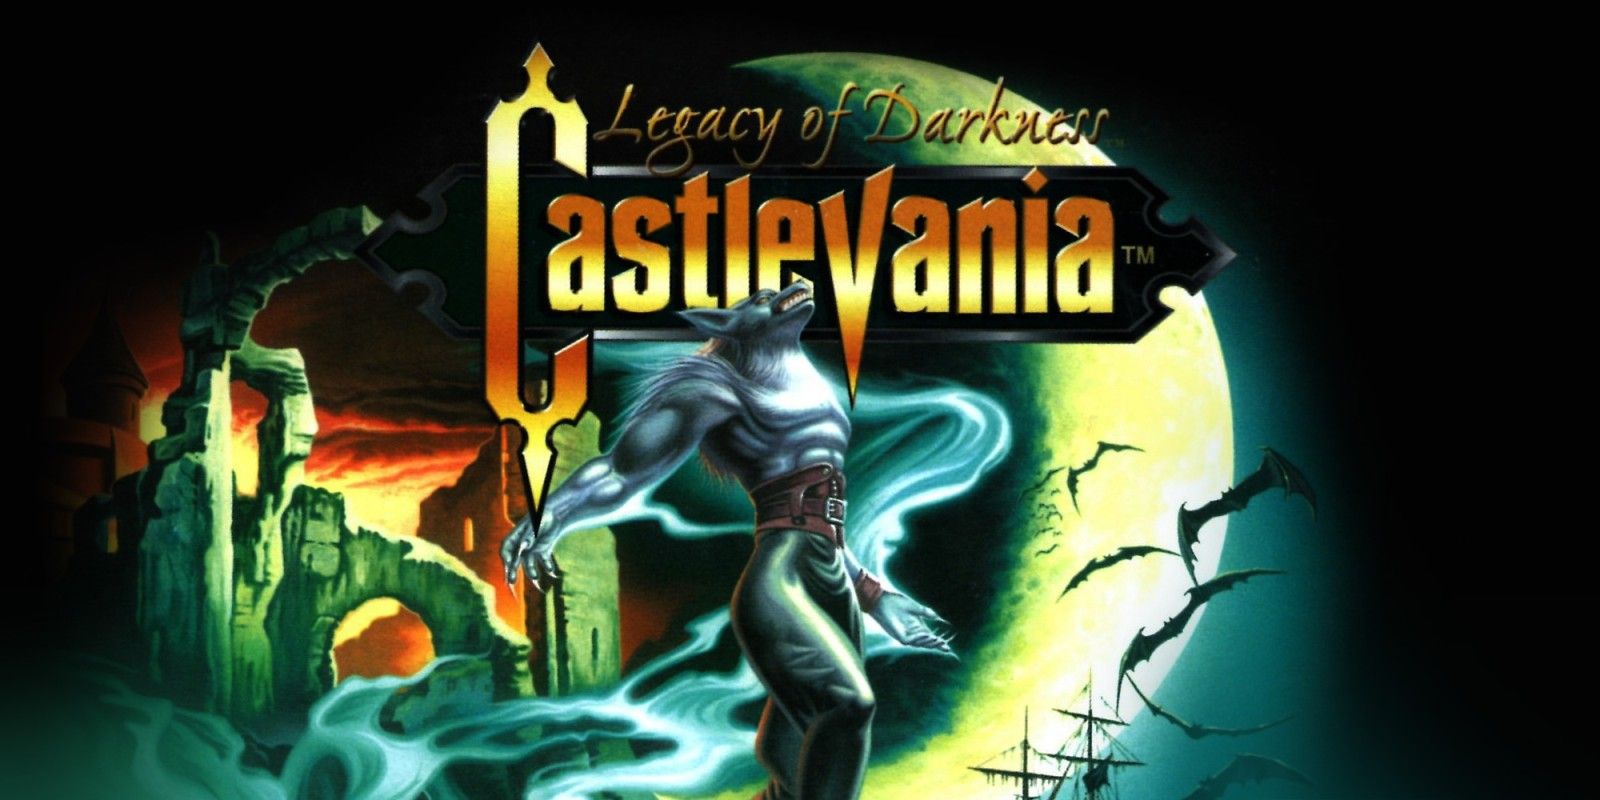 castlevania legacy of darkness box art